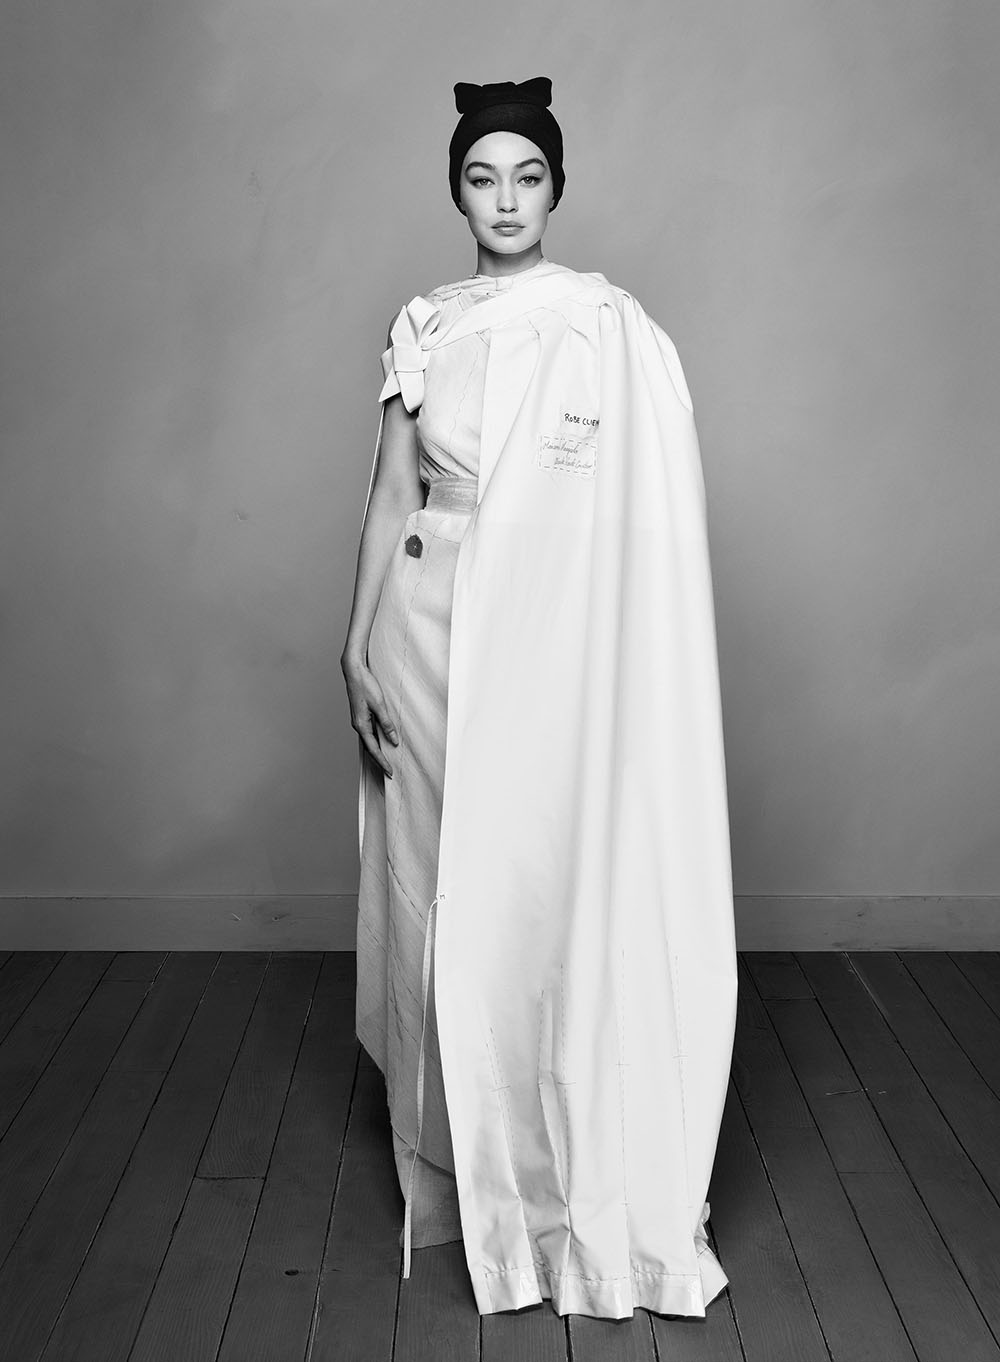 Gigi Hadid covers Harper’s Bazaar US April 2020 by Sølve Sundsbø